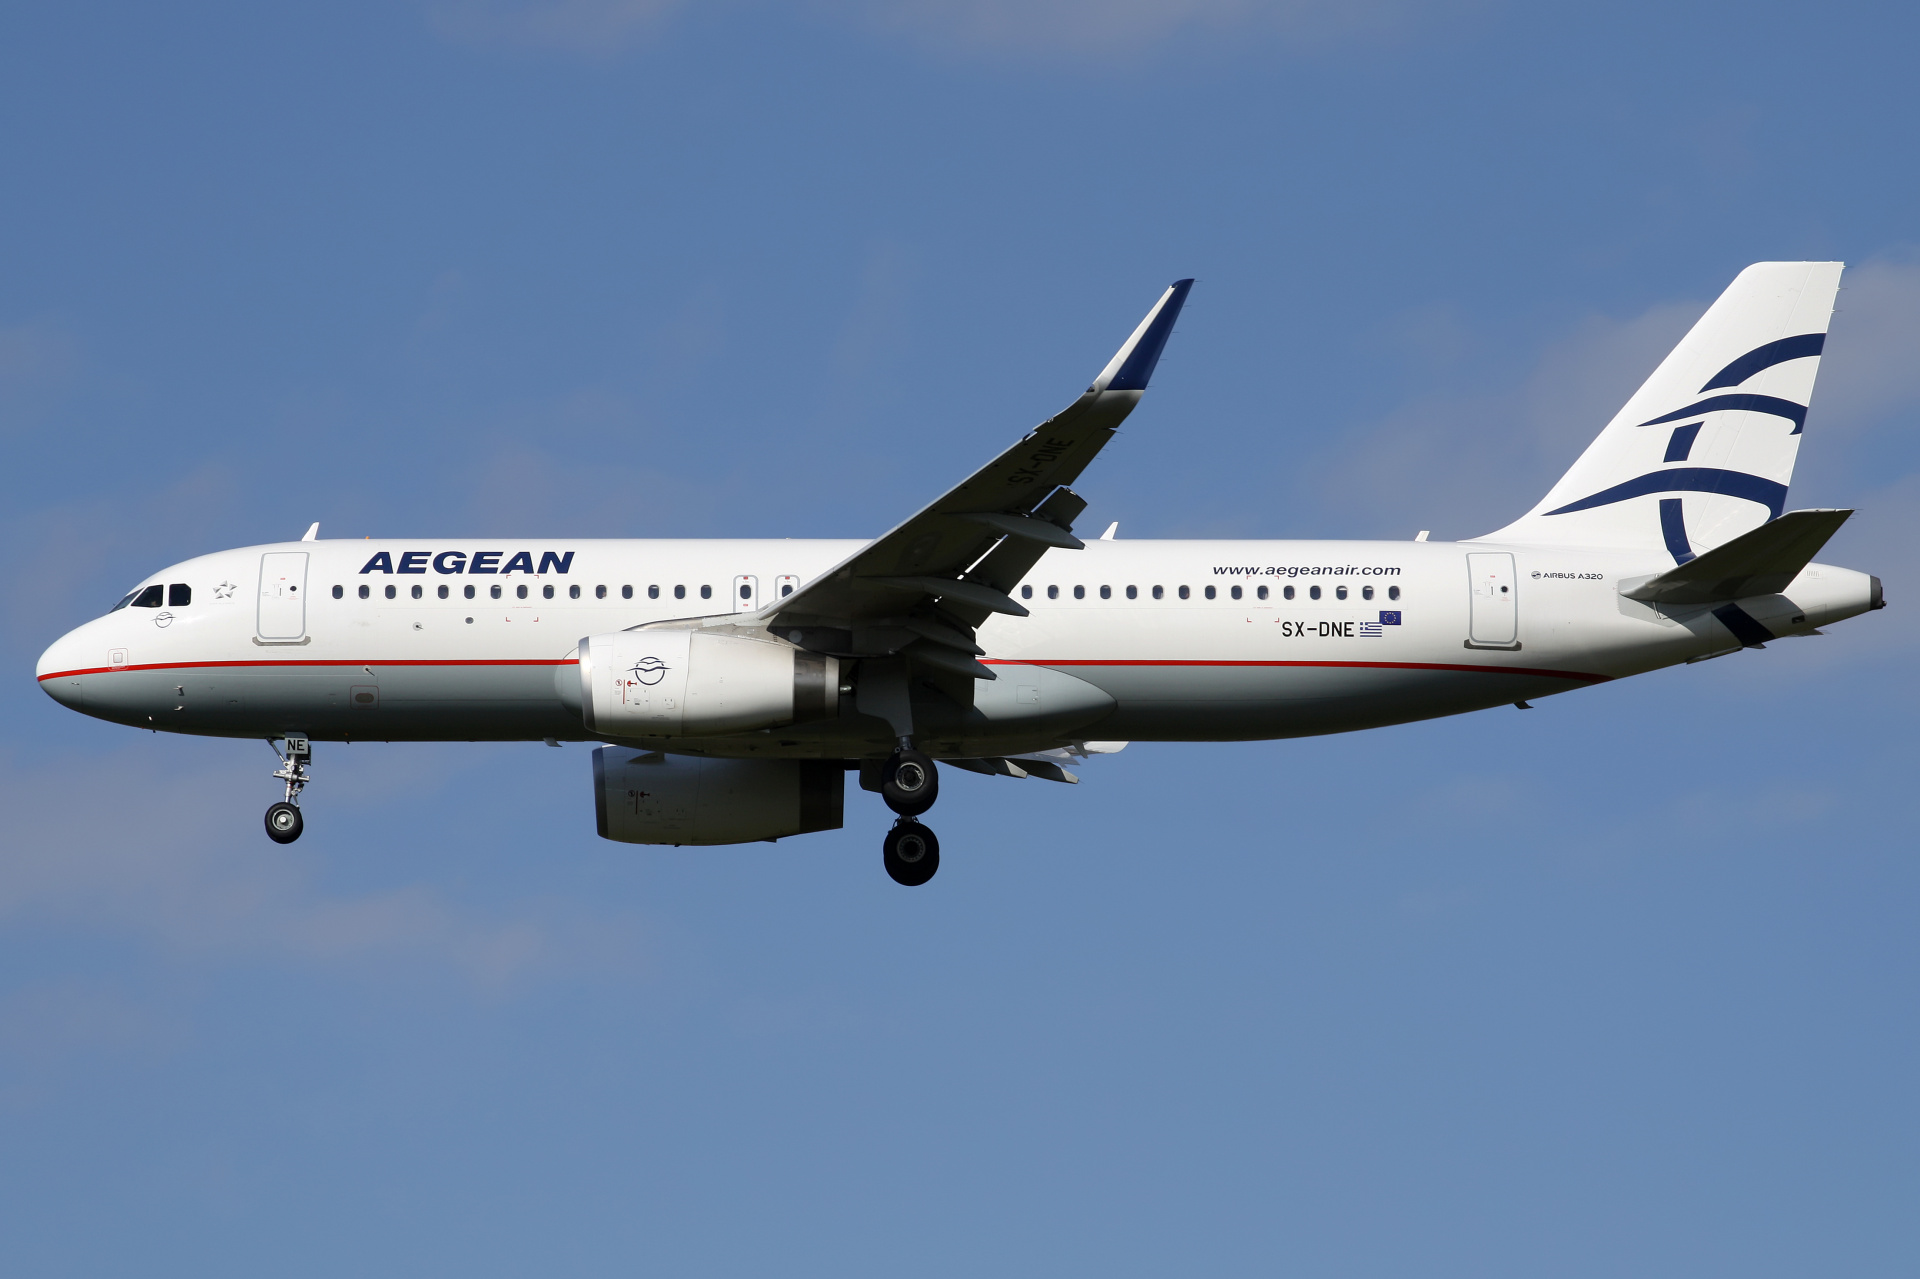 SX-DNE (Aircraft » EPWA Spotting » Airbus A320-200 » Aegean Airlines)